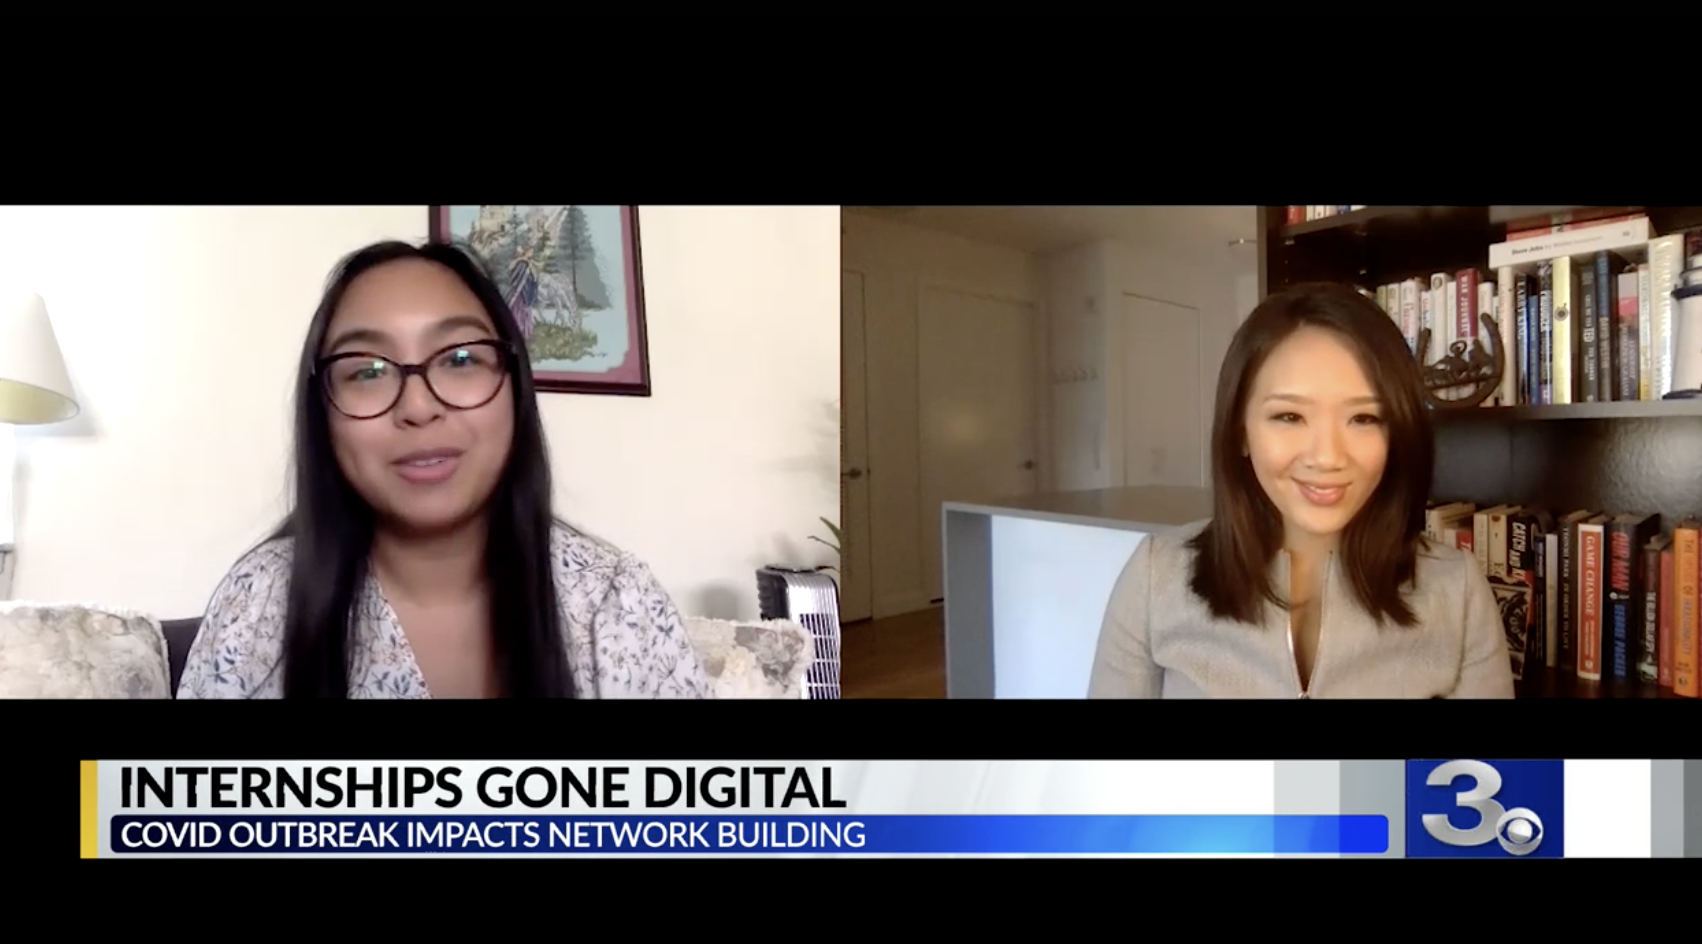 B2 intern Alexis Novales is interviewed by CBS Newspath's Nancy Chen about her virtual internship